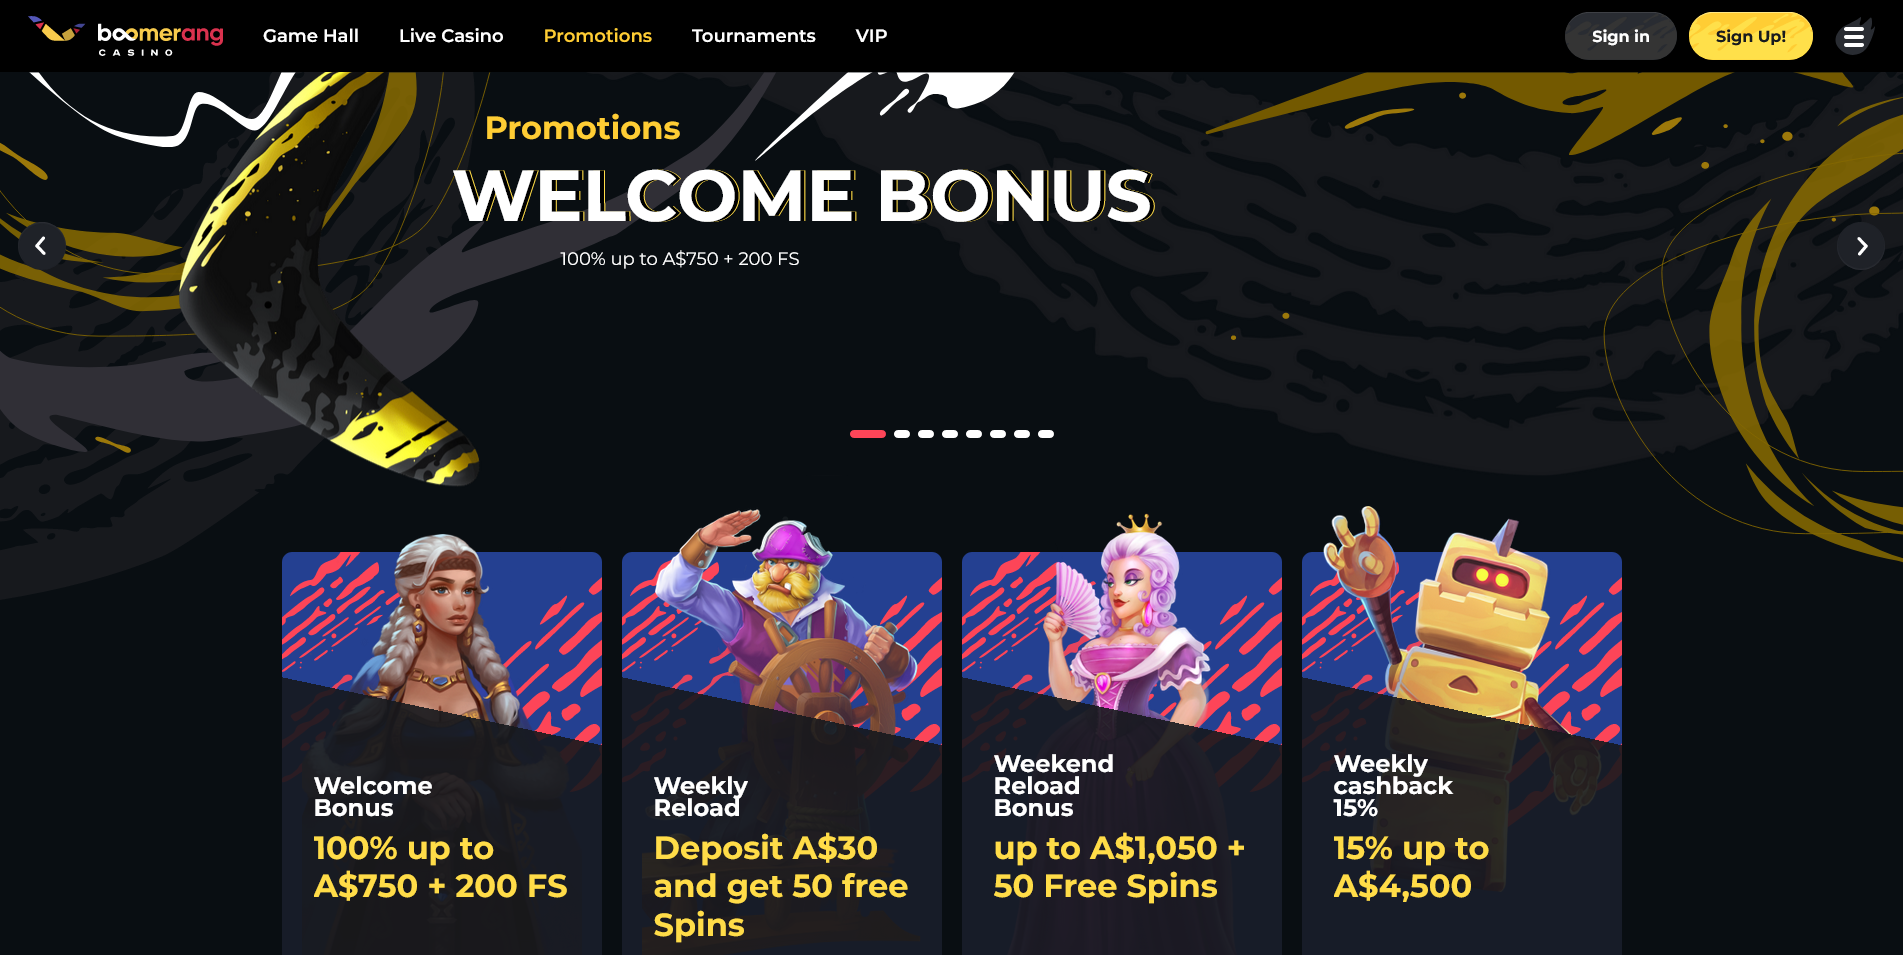 Screenshot of Bonuses page on Boomerang casino site